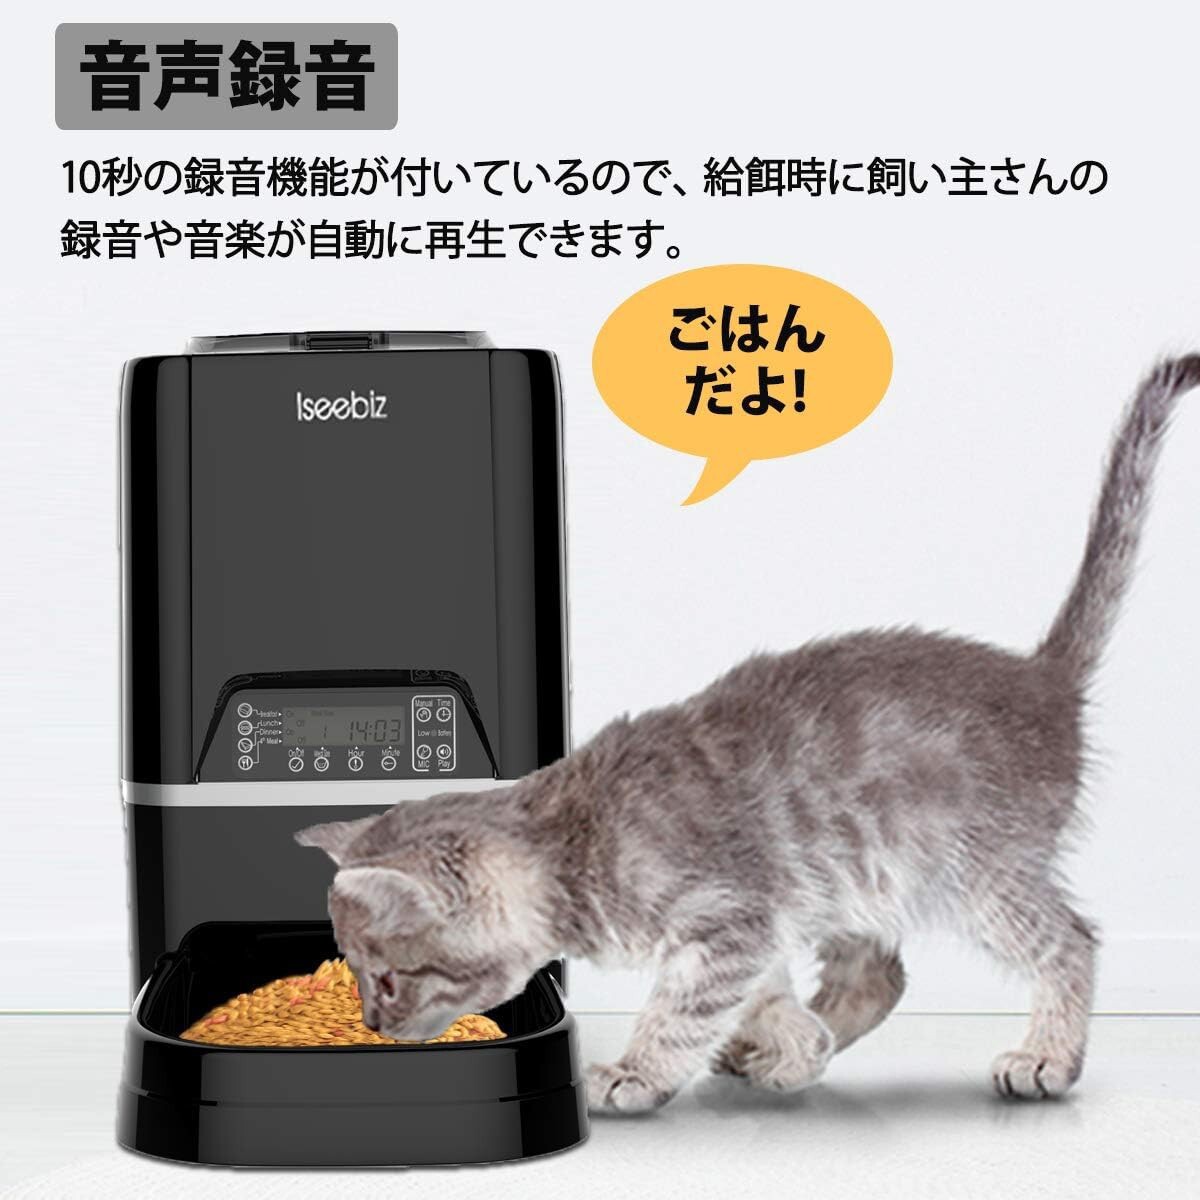 自動給餌器 猫 犬用ペット自動餌やり機 5L大容量 1日4食で最大20日連続自動給餌 タイマー式 録音可 水洗い可能 猫/犬